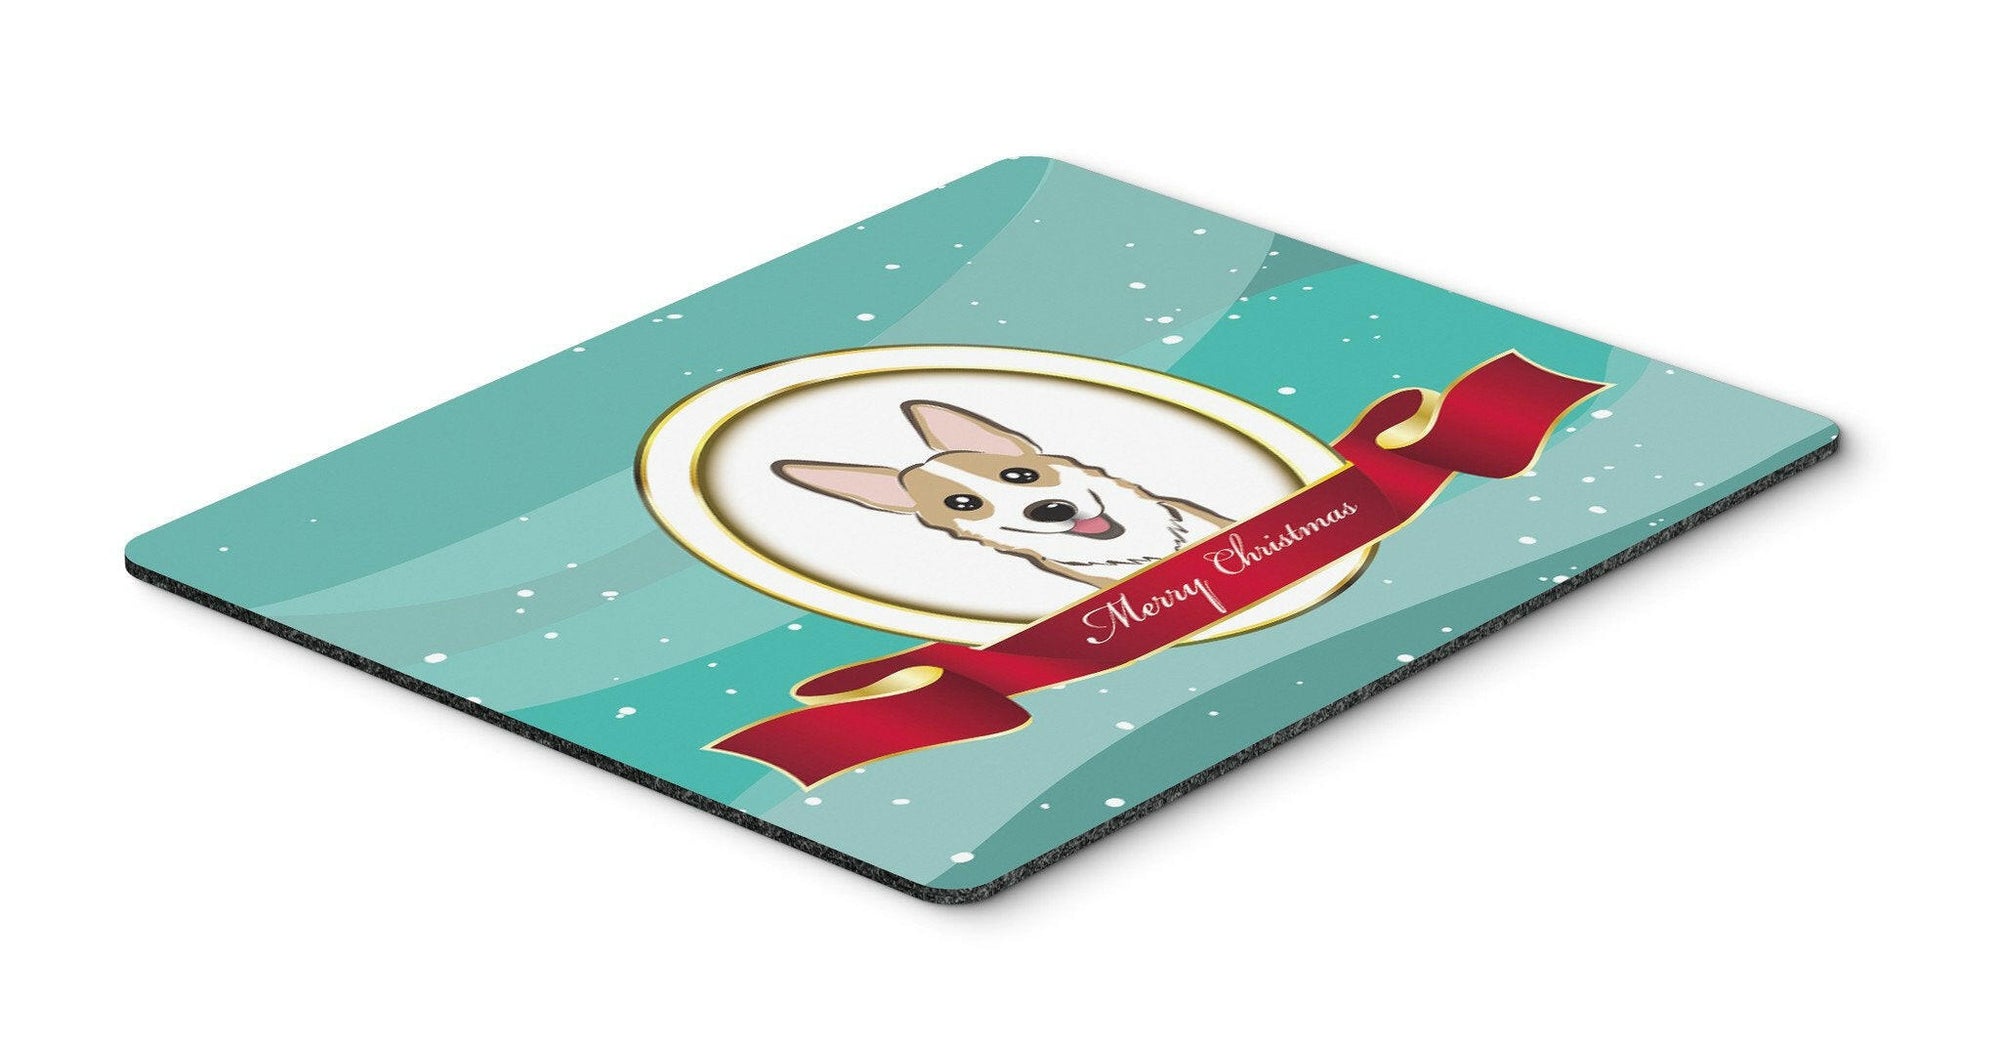 Sable Corgi Merry Christmas Mouse Pad, Hot Pad or Trivet BB1563MP by Caroline's Treasures